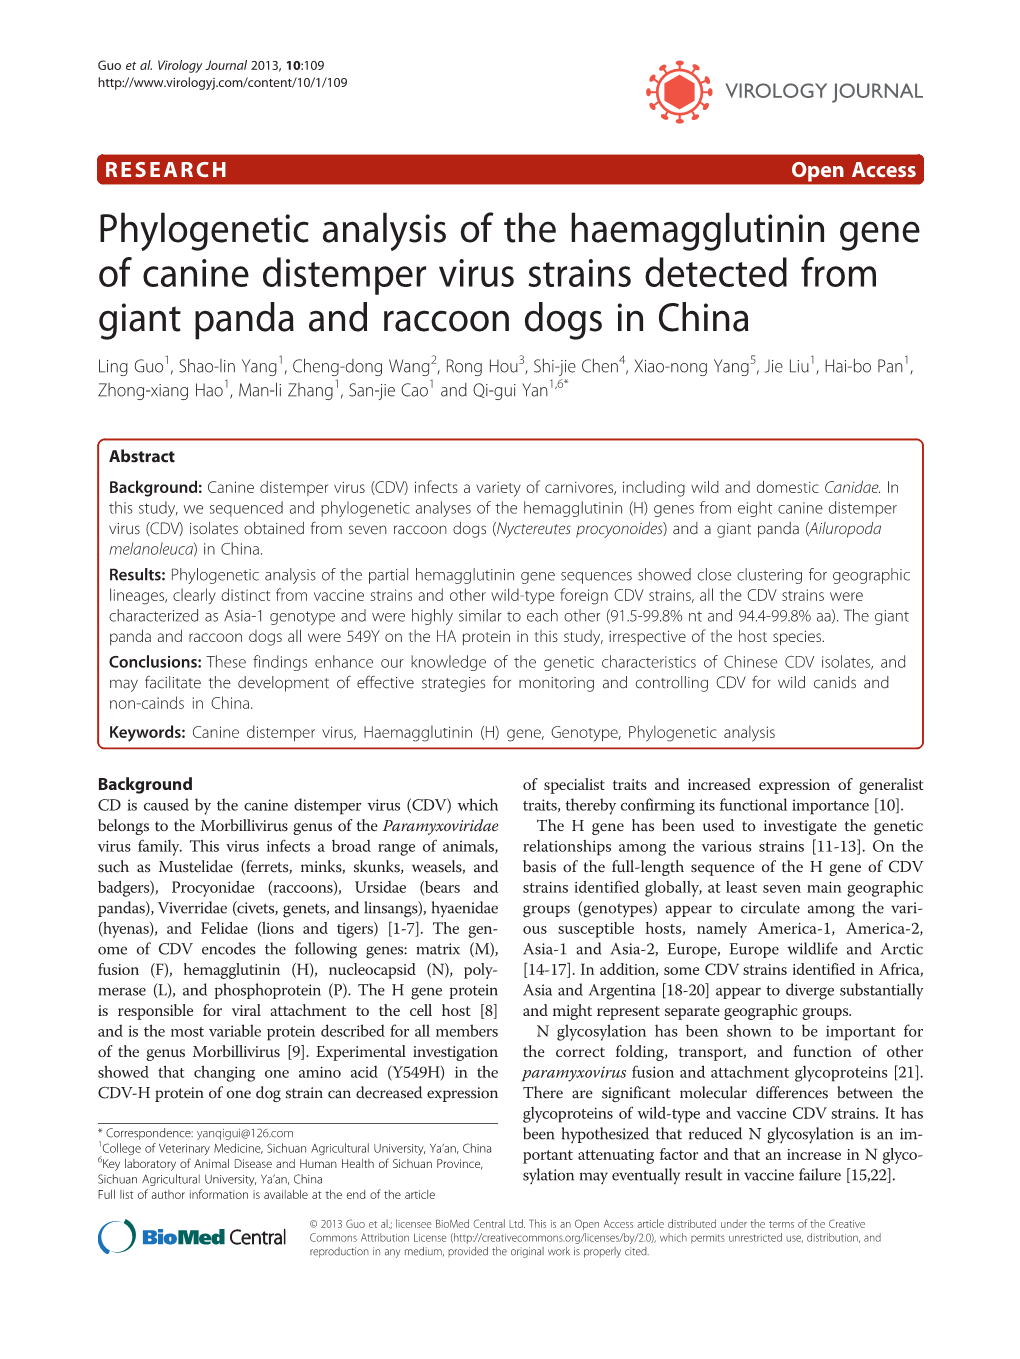 Phylogenetic Analysis of the Haemagglutinin Gene of Canine